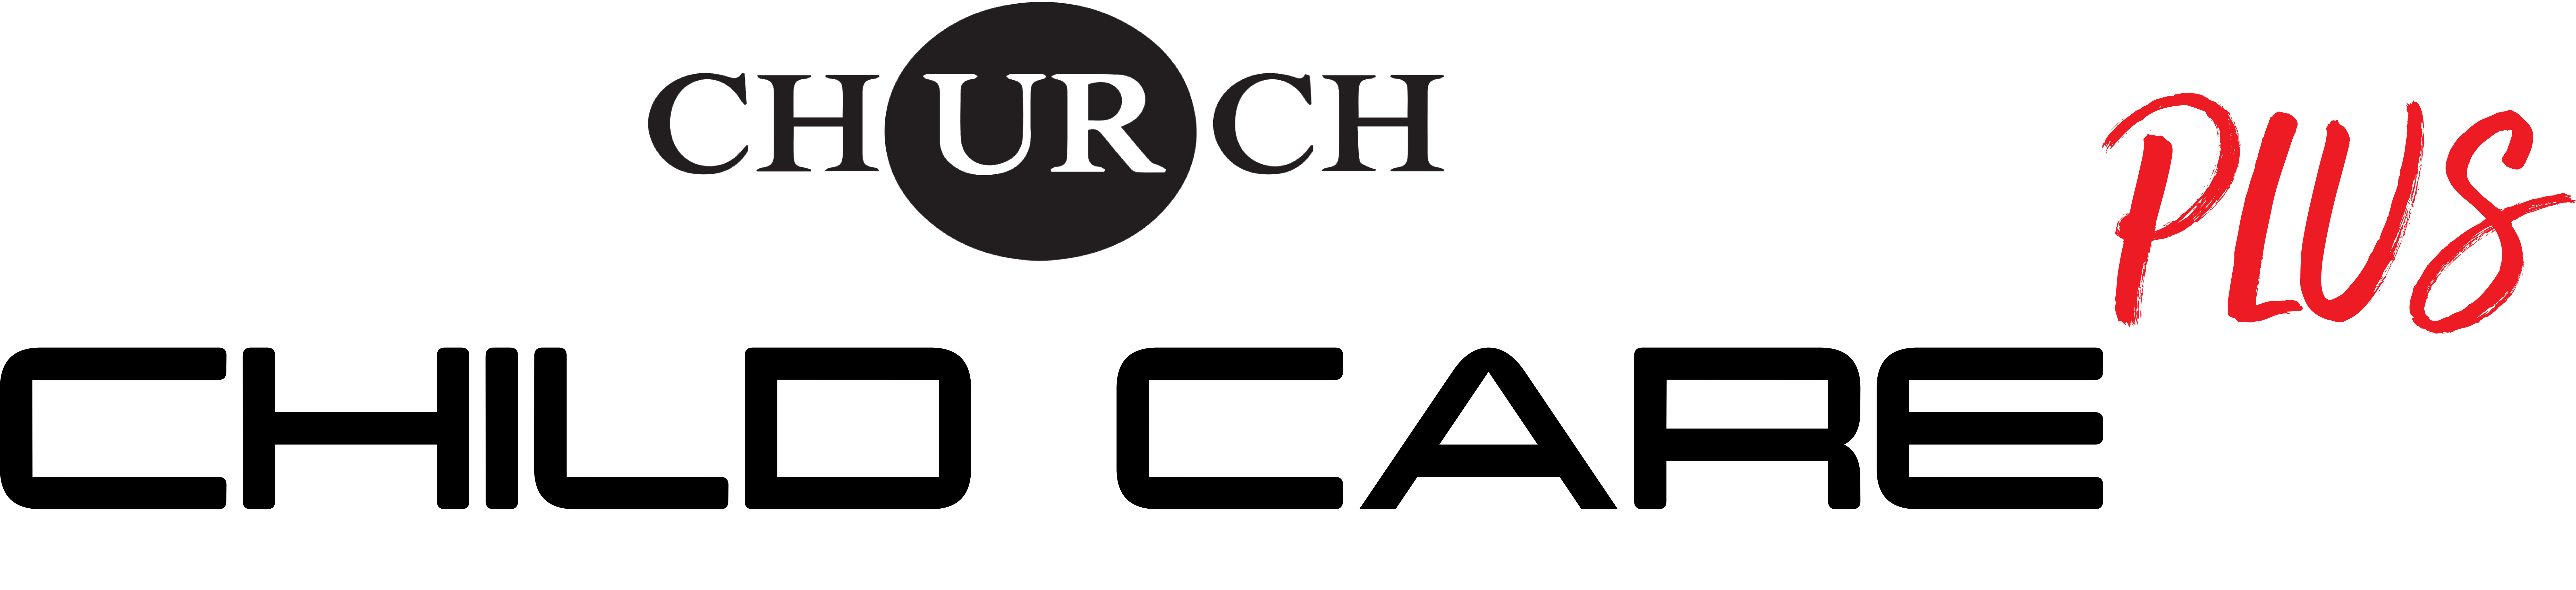 Church Child Care Center logo